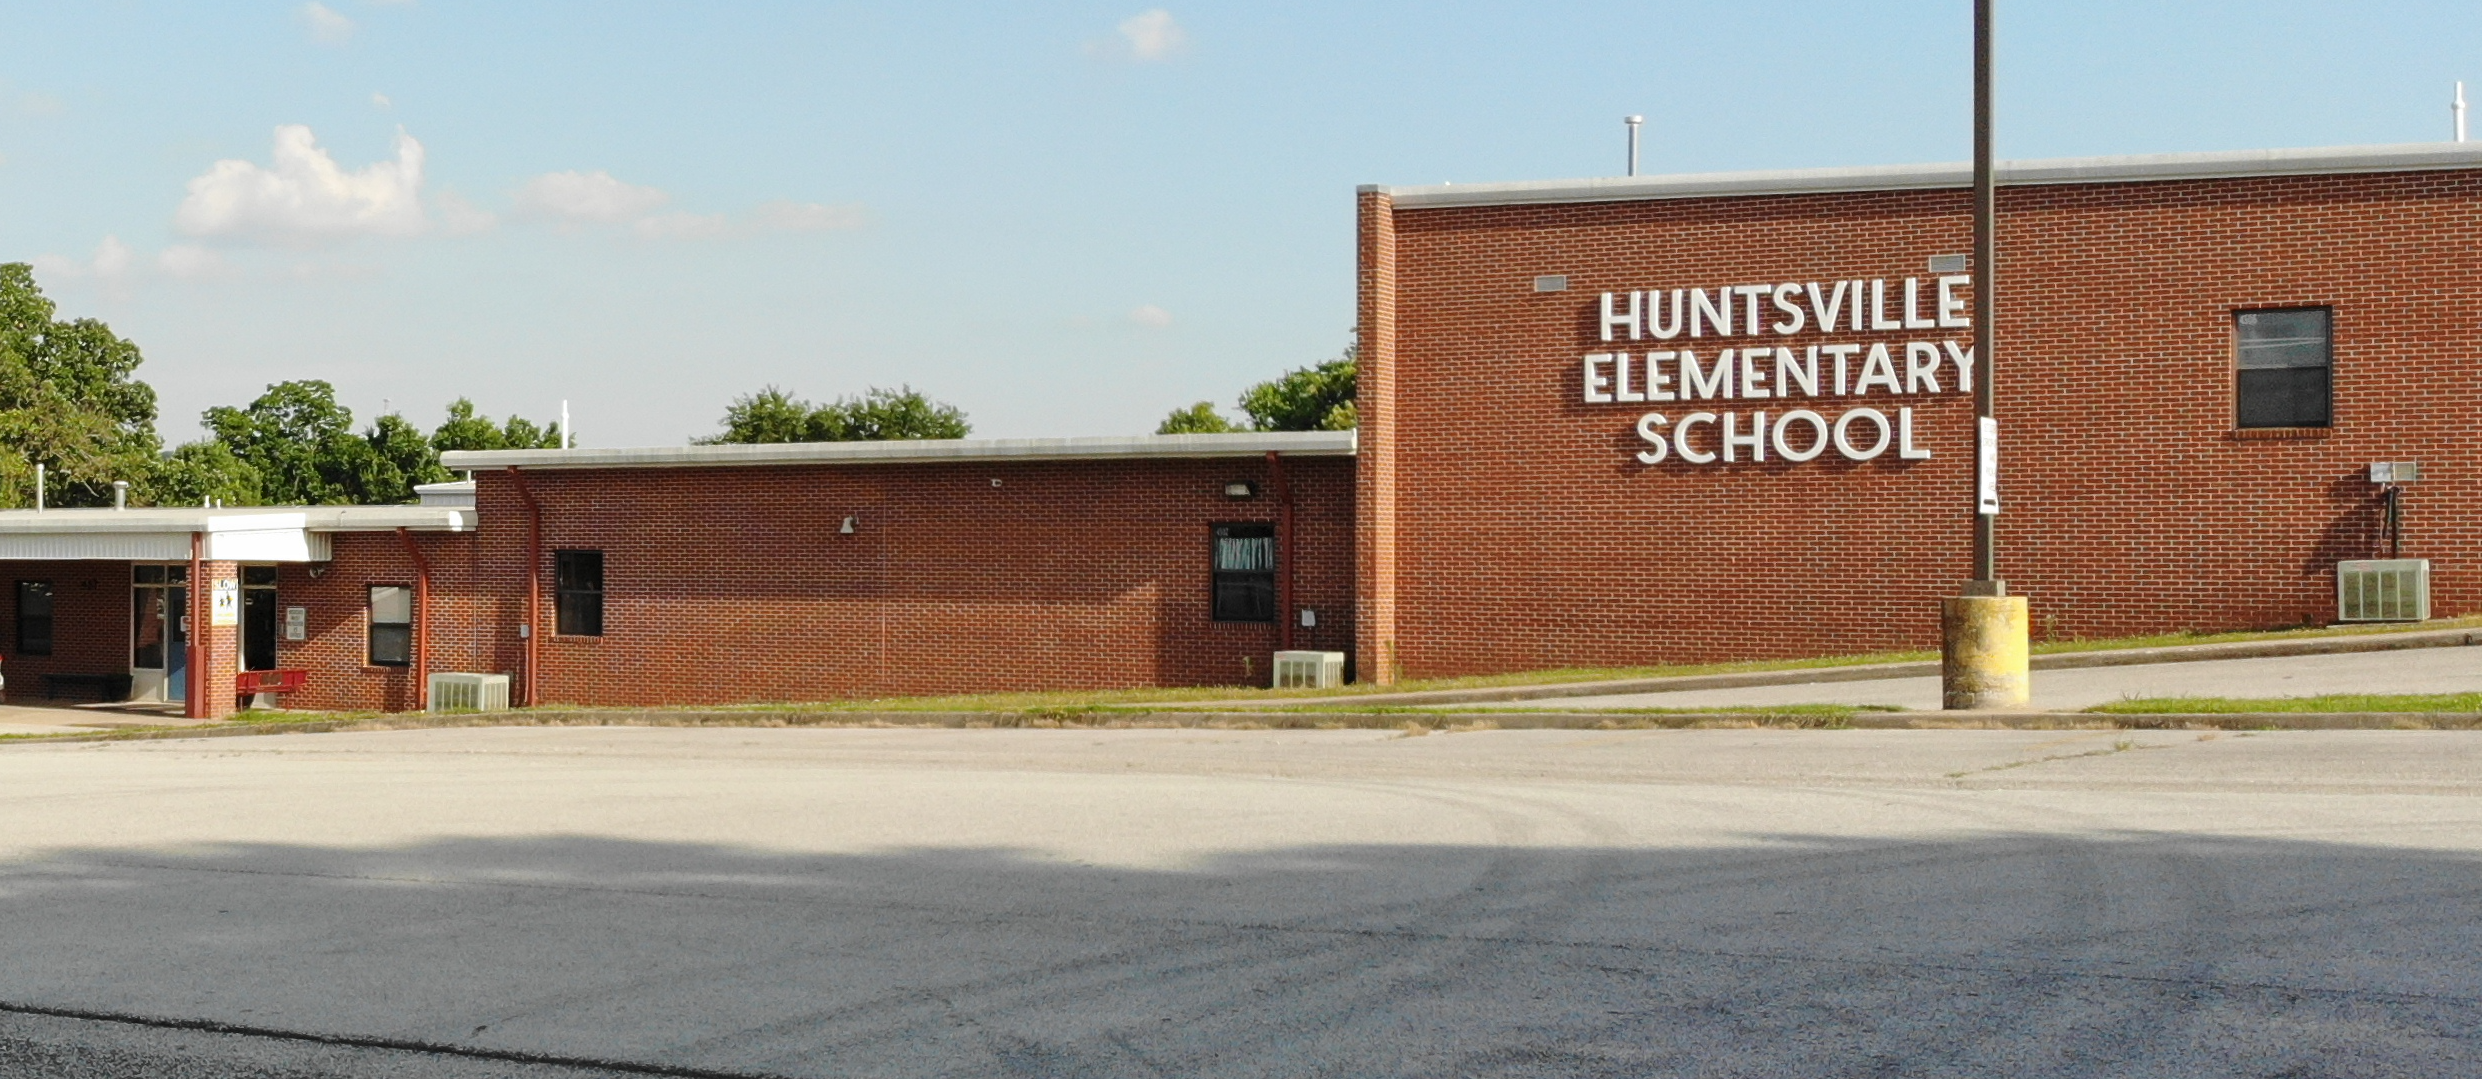 Huntsville Elementary School